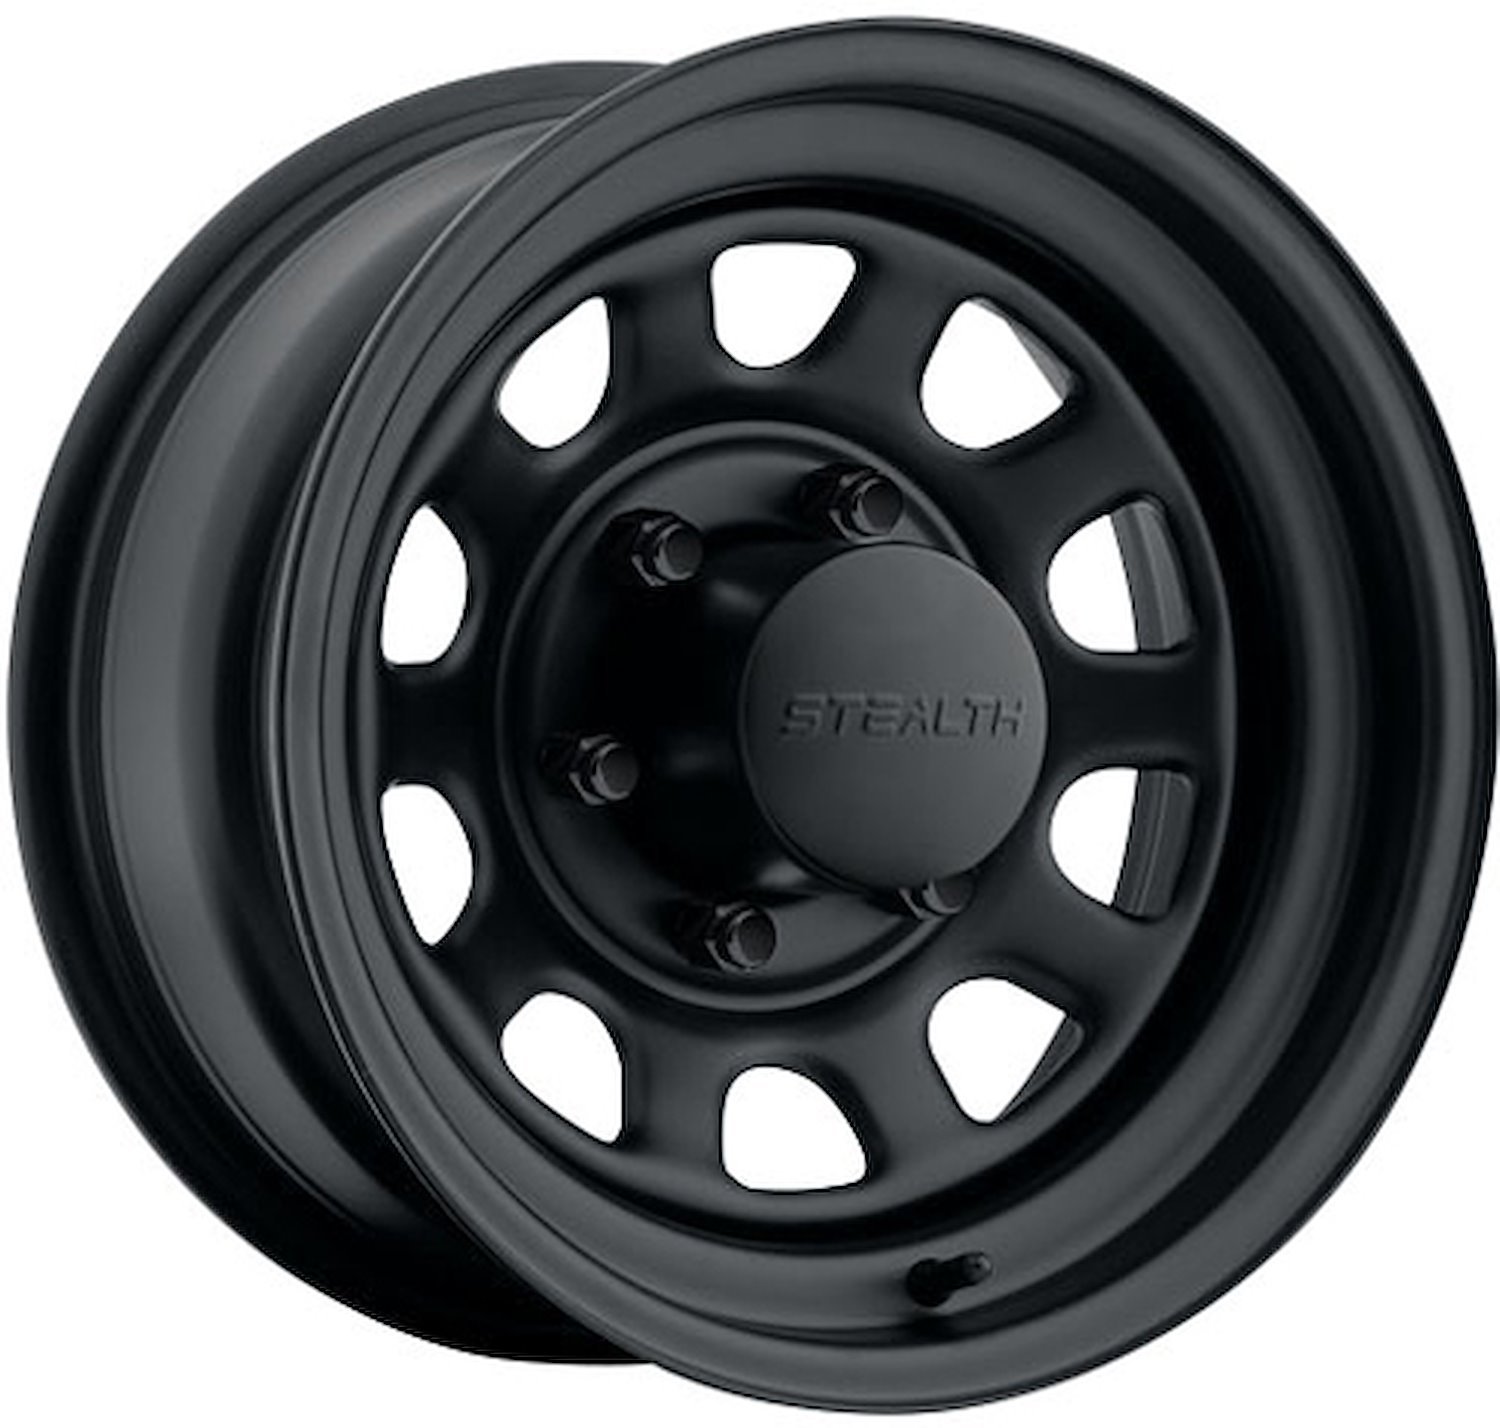 Stealth Black Daytona Wheel (Series 804) Size: 17" x 9"